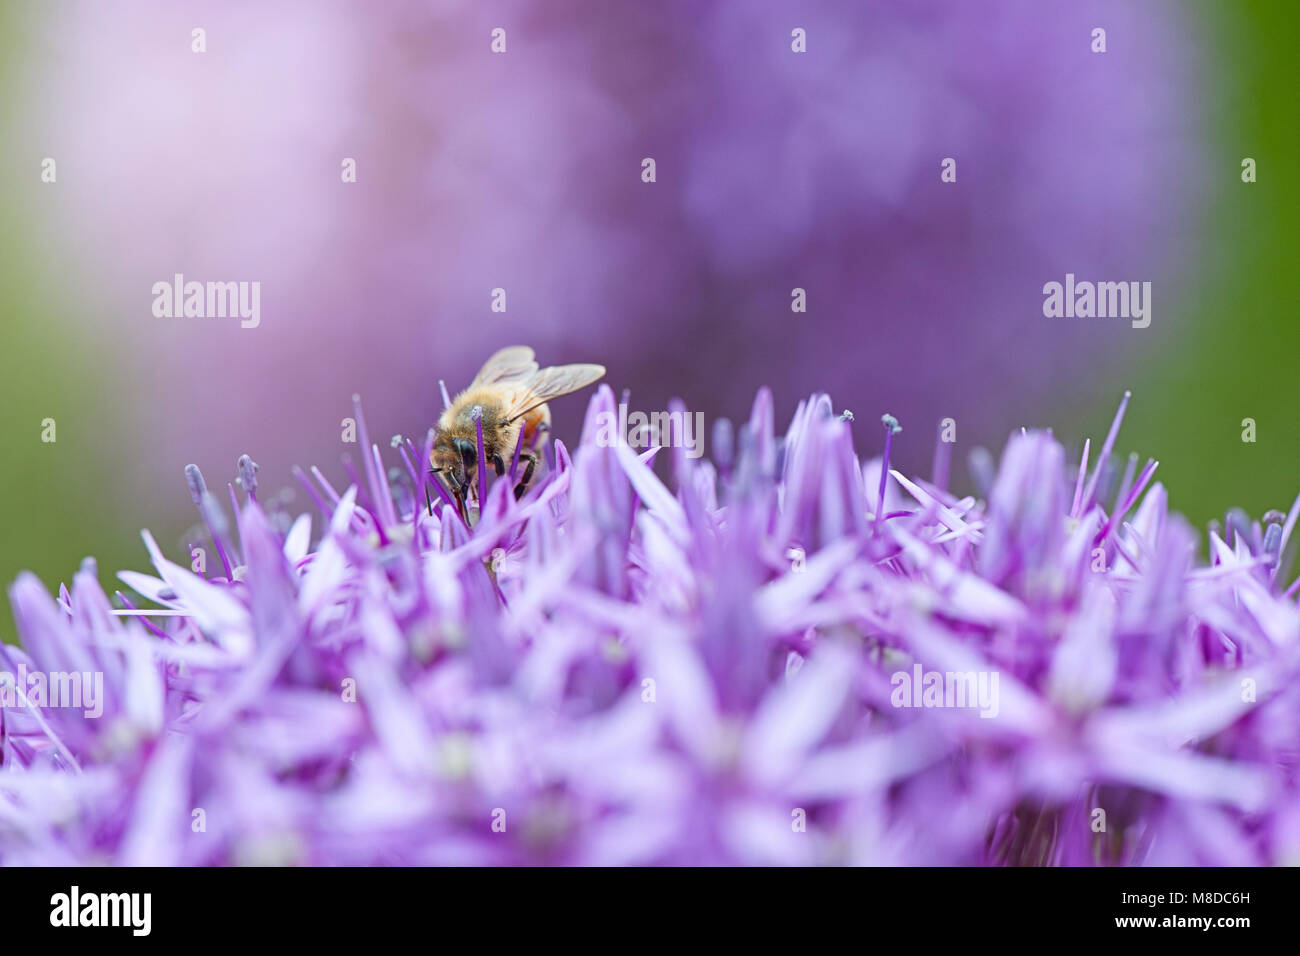 Close-up image of a summer flowering purple Allium flower - Ornamental onion Stock Photo